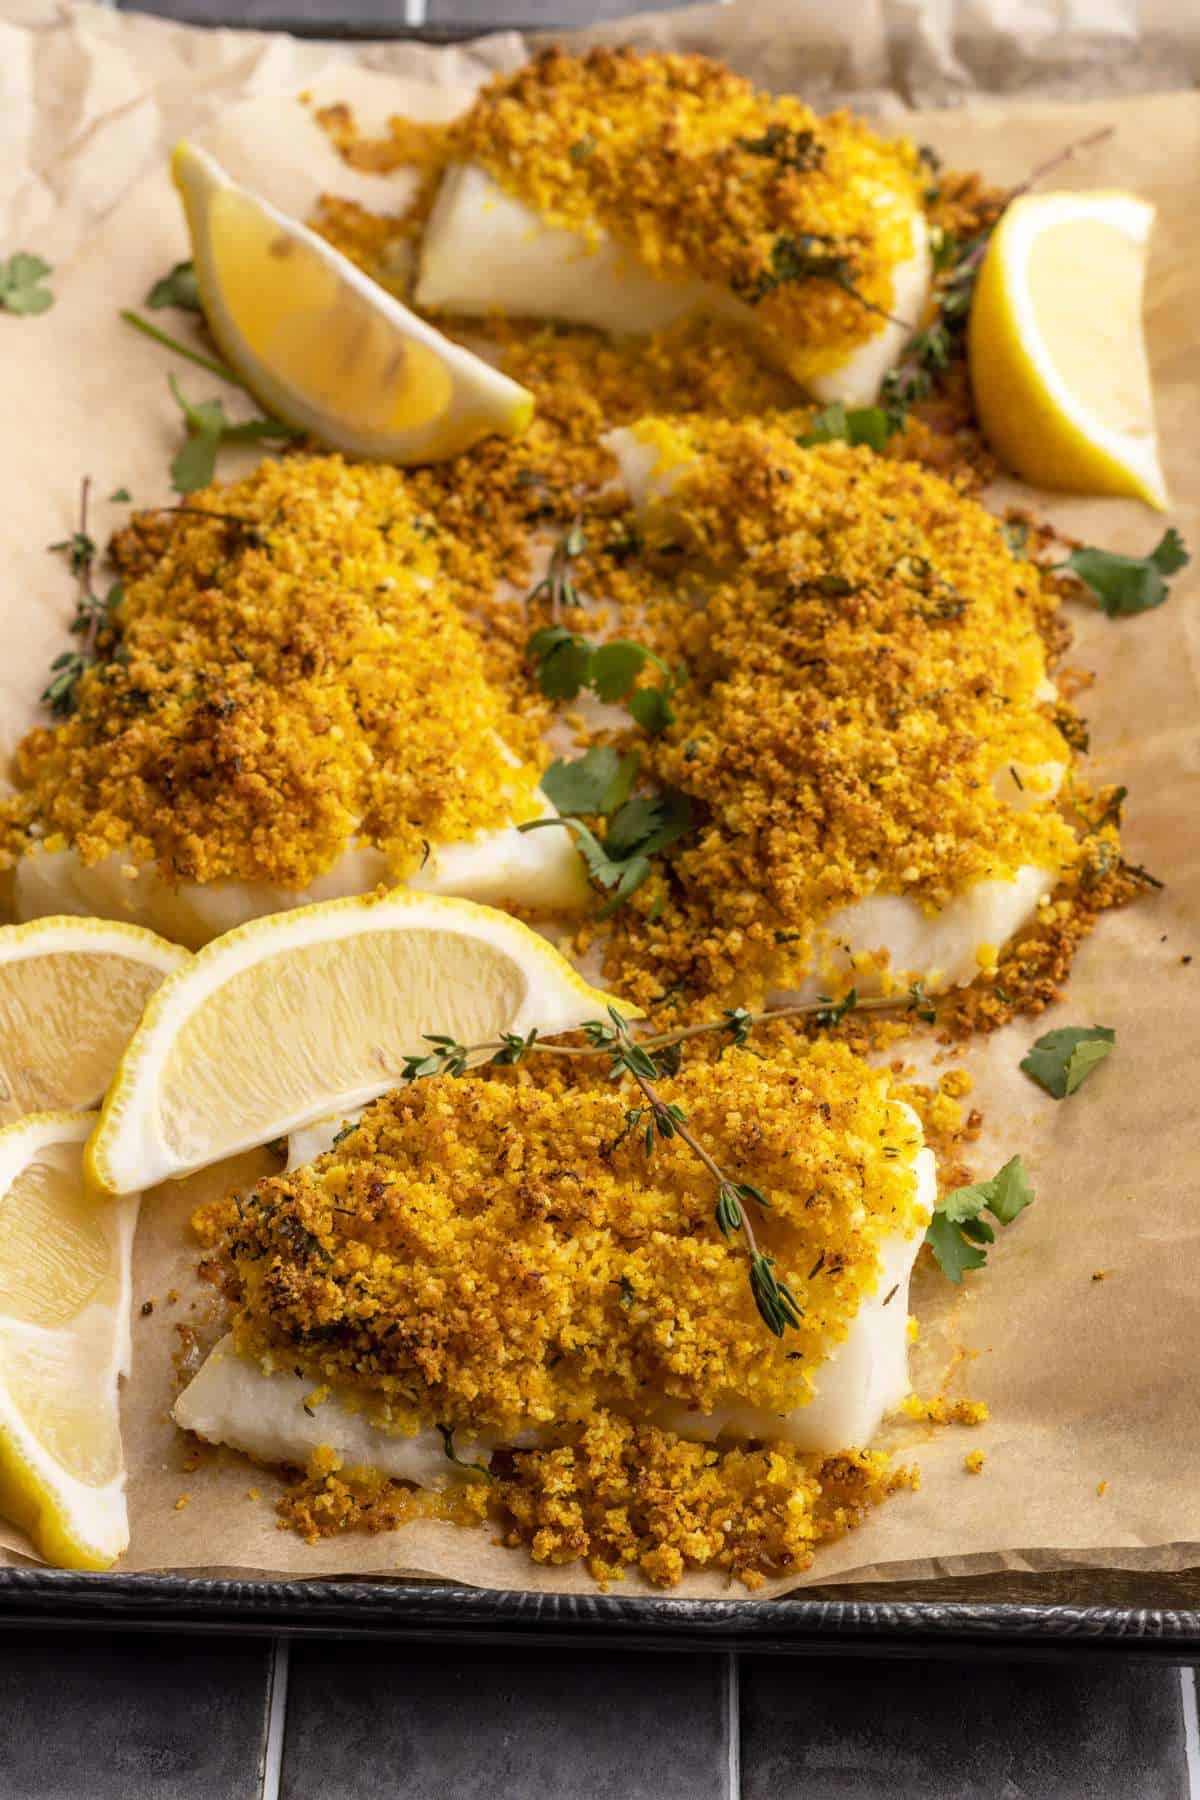 Panko crusted cod with lemon wedges.